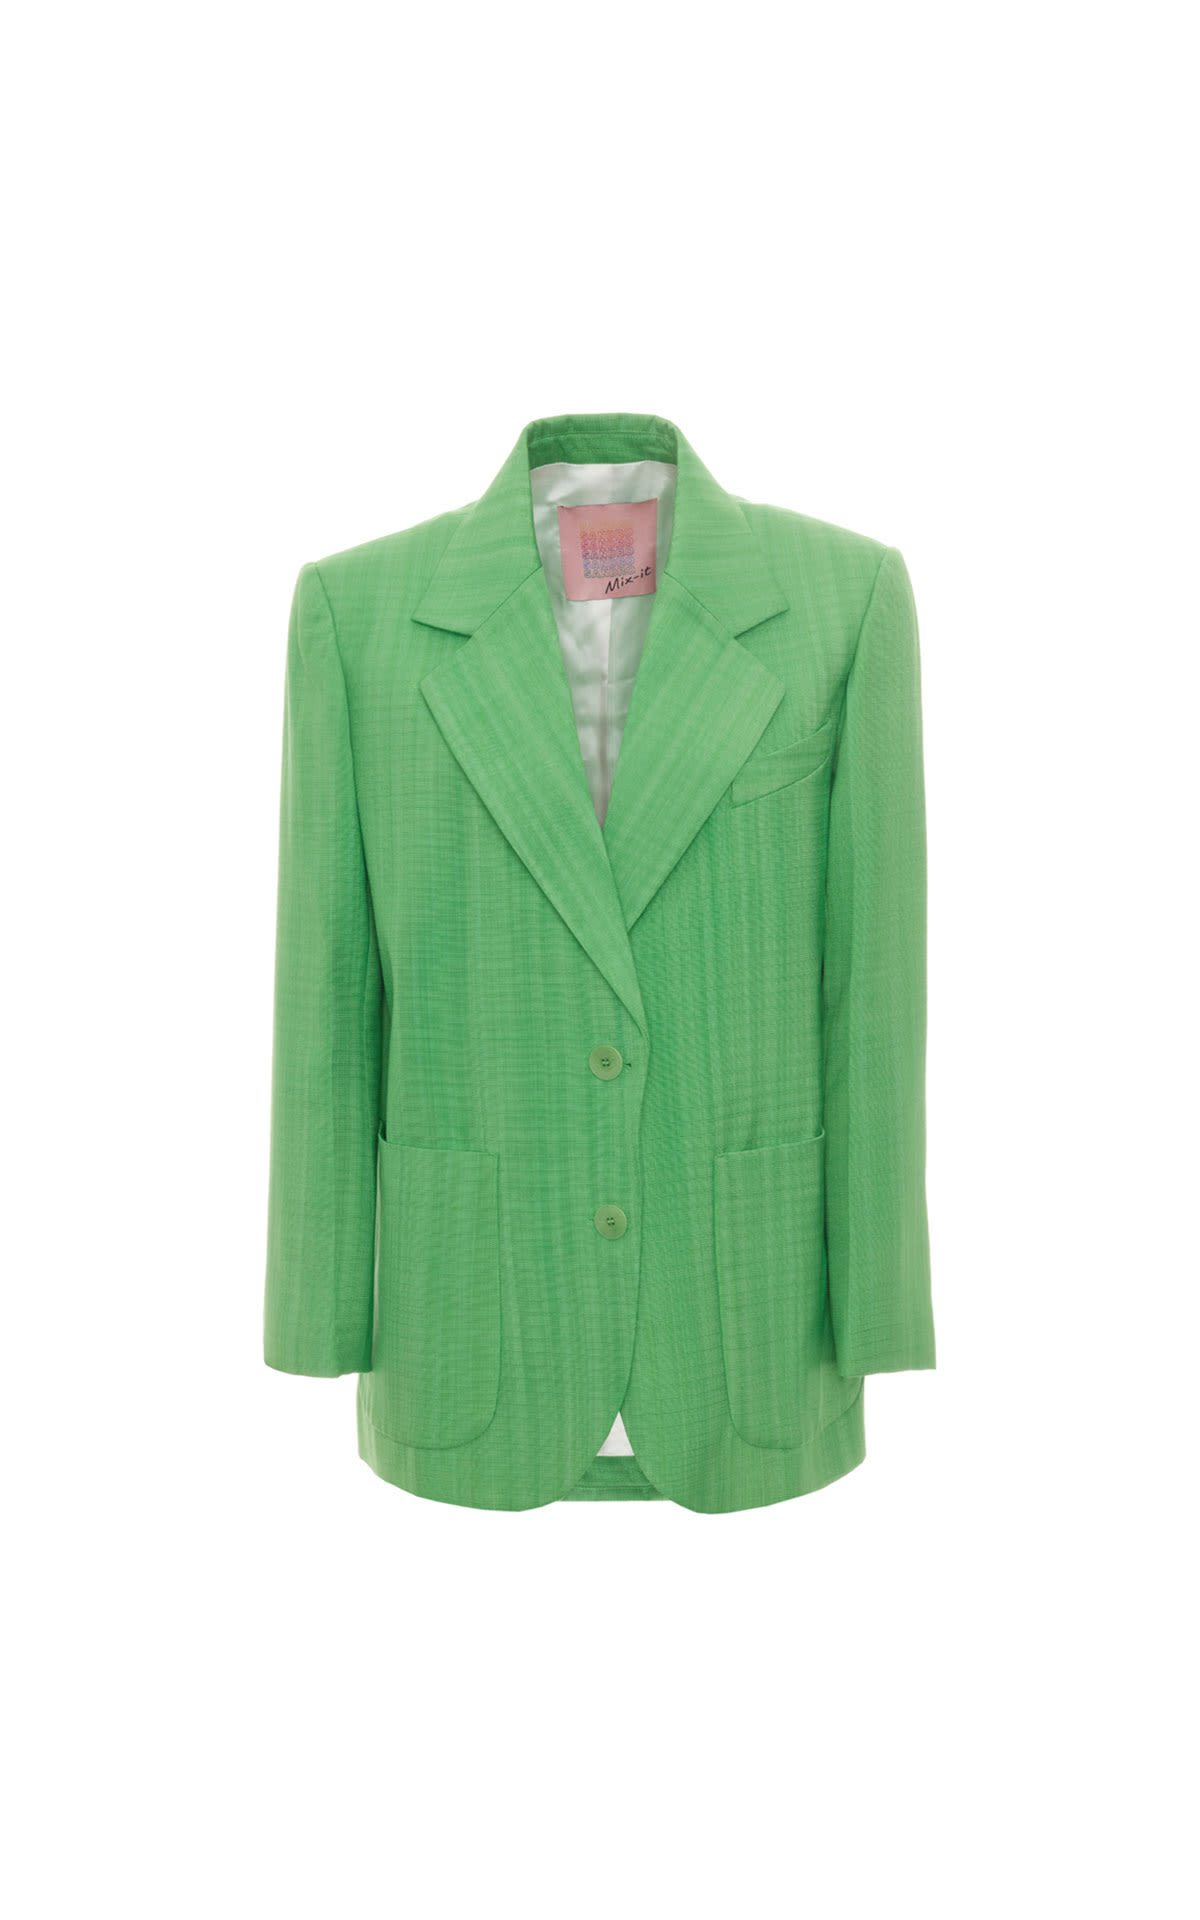 Sandro Green grass jacket from Bicester Village